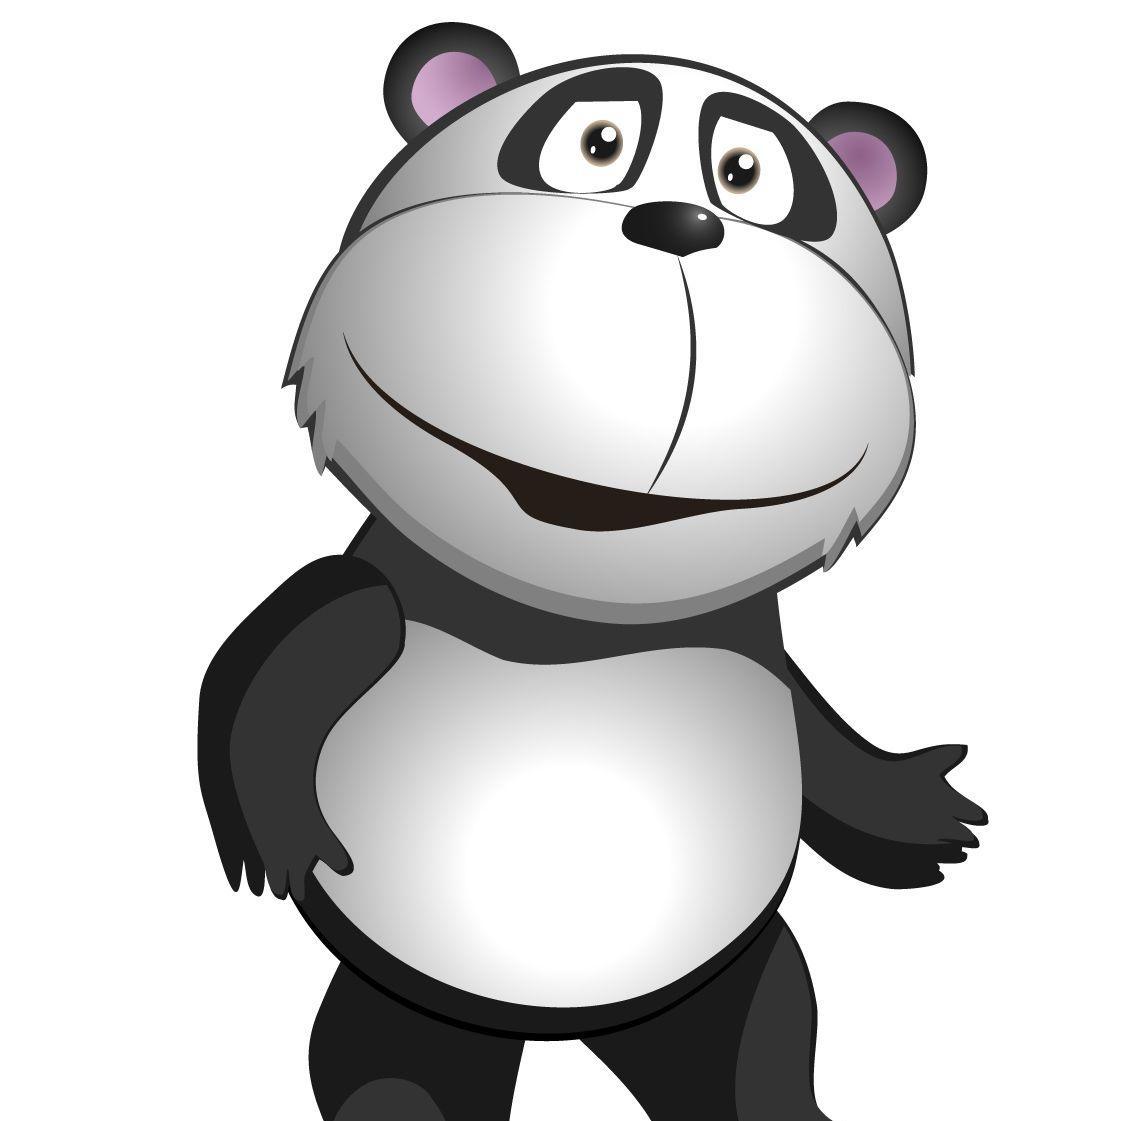 Eccentric Panda Addicted to Casino Games.